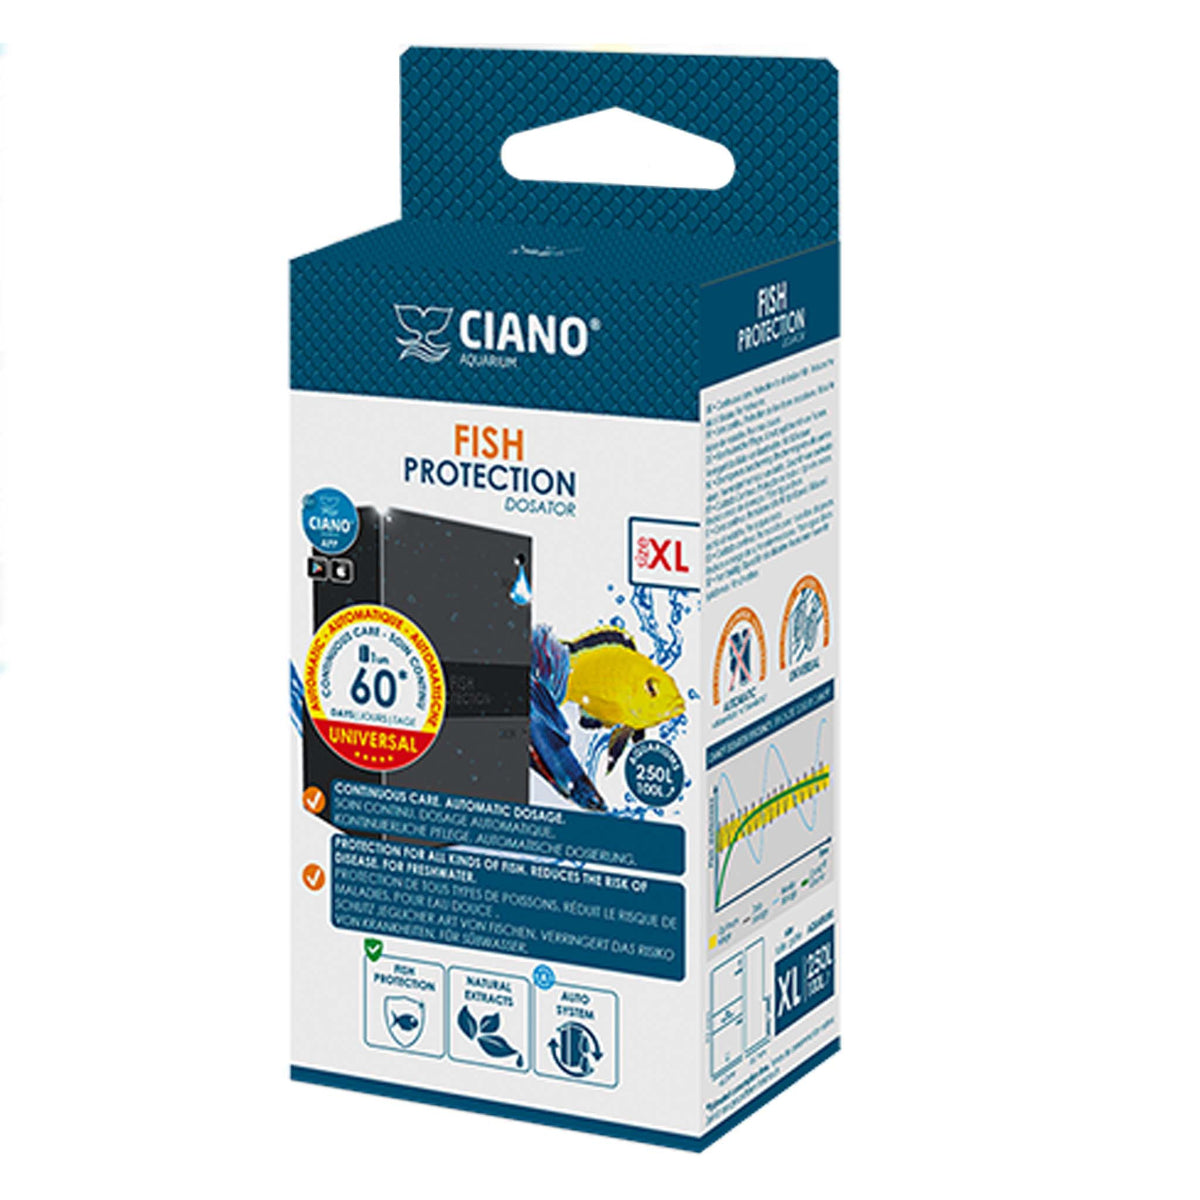 Ciano Fish Protection Dosator 4 Sizes